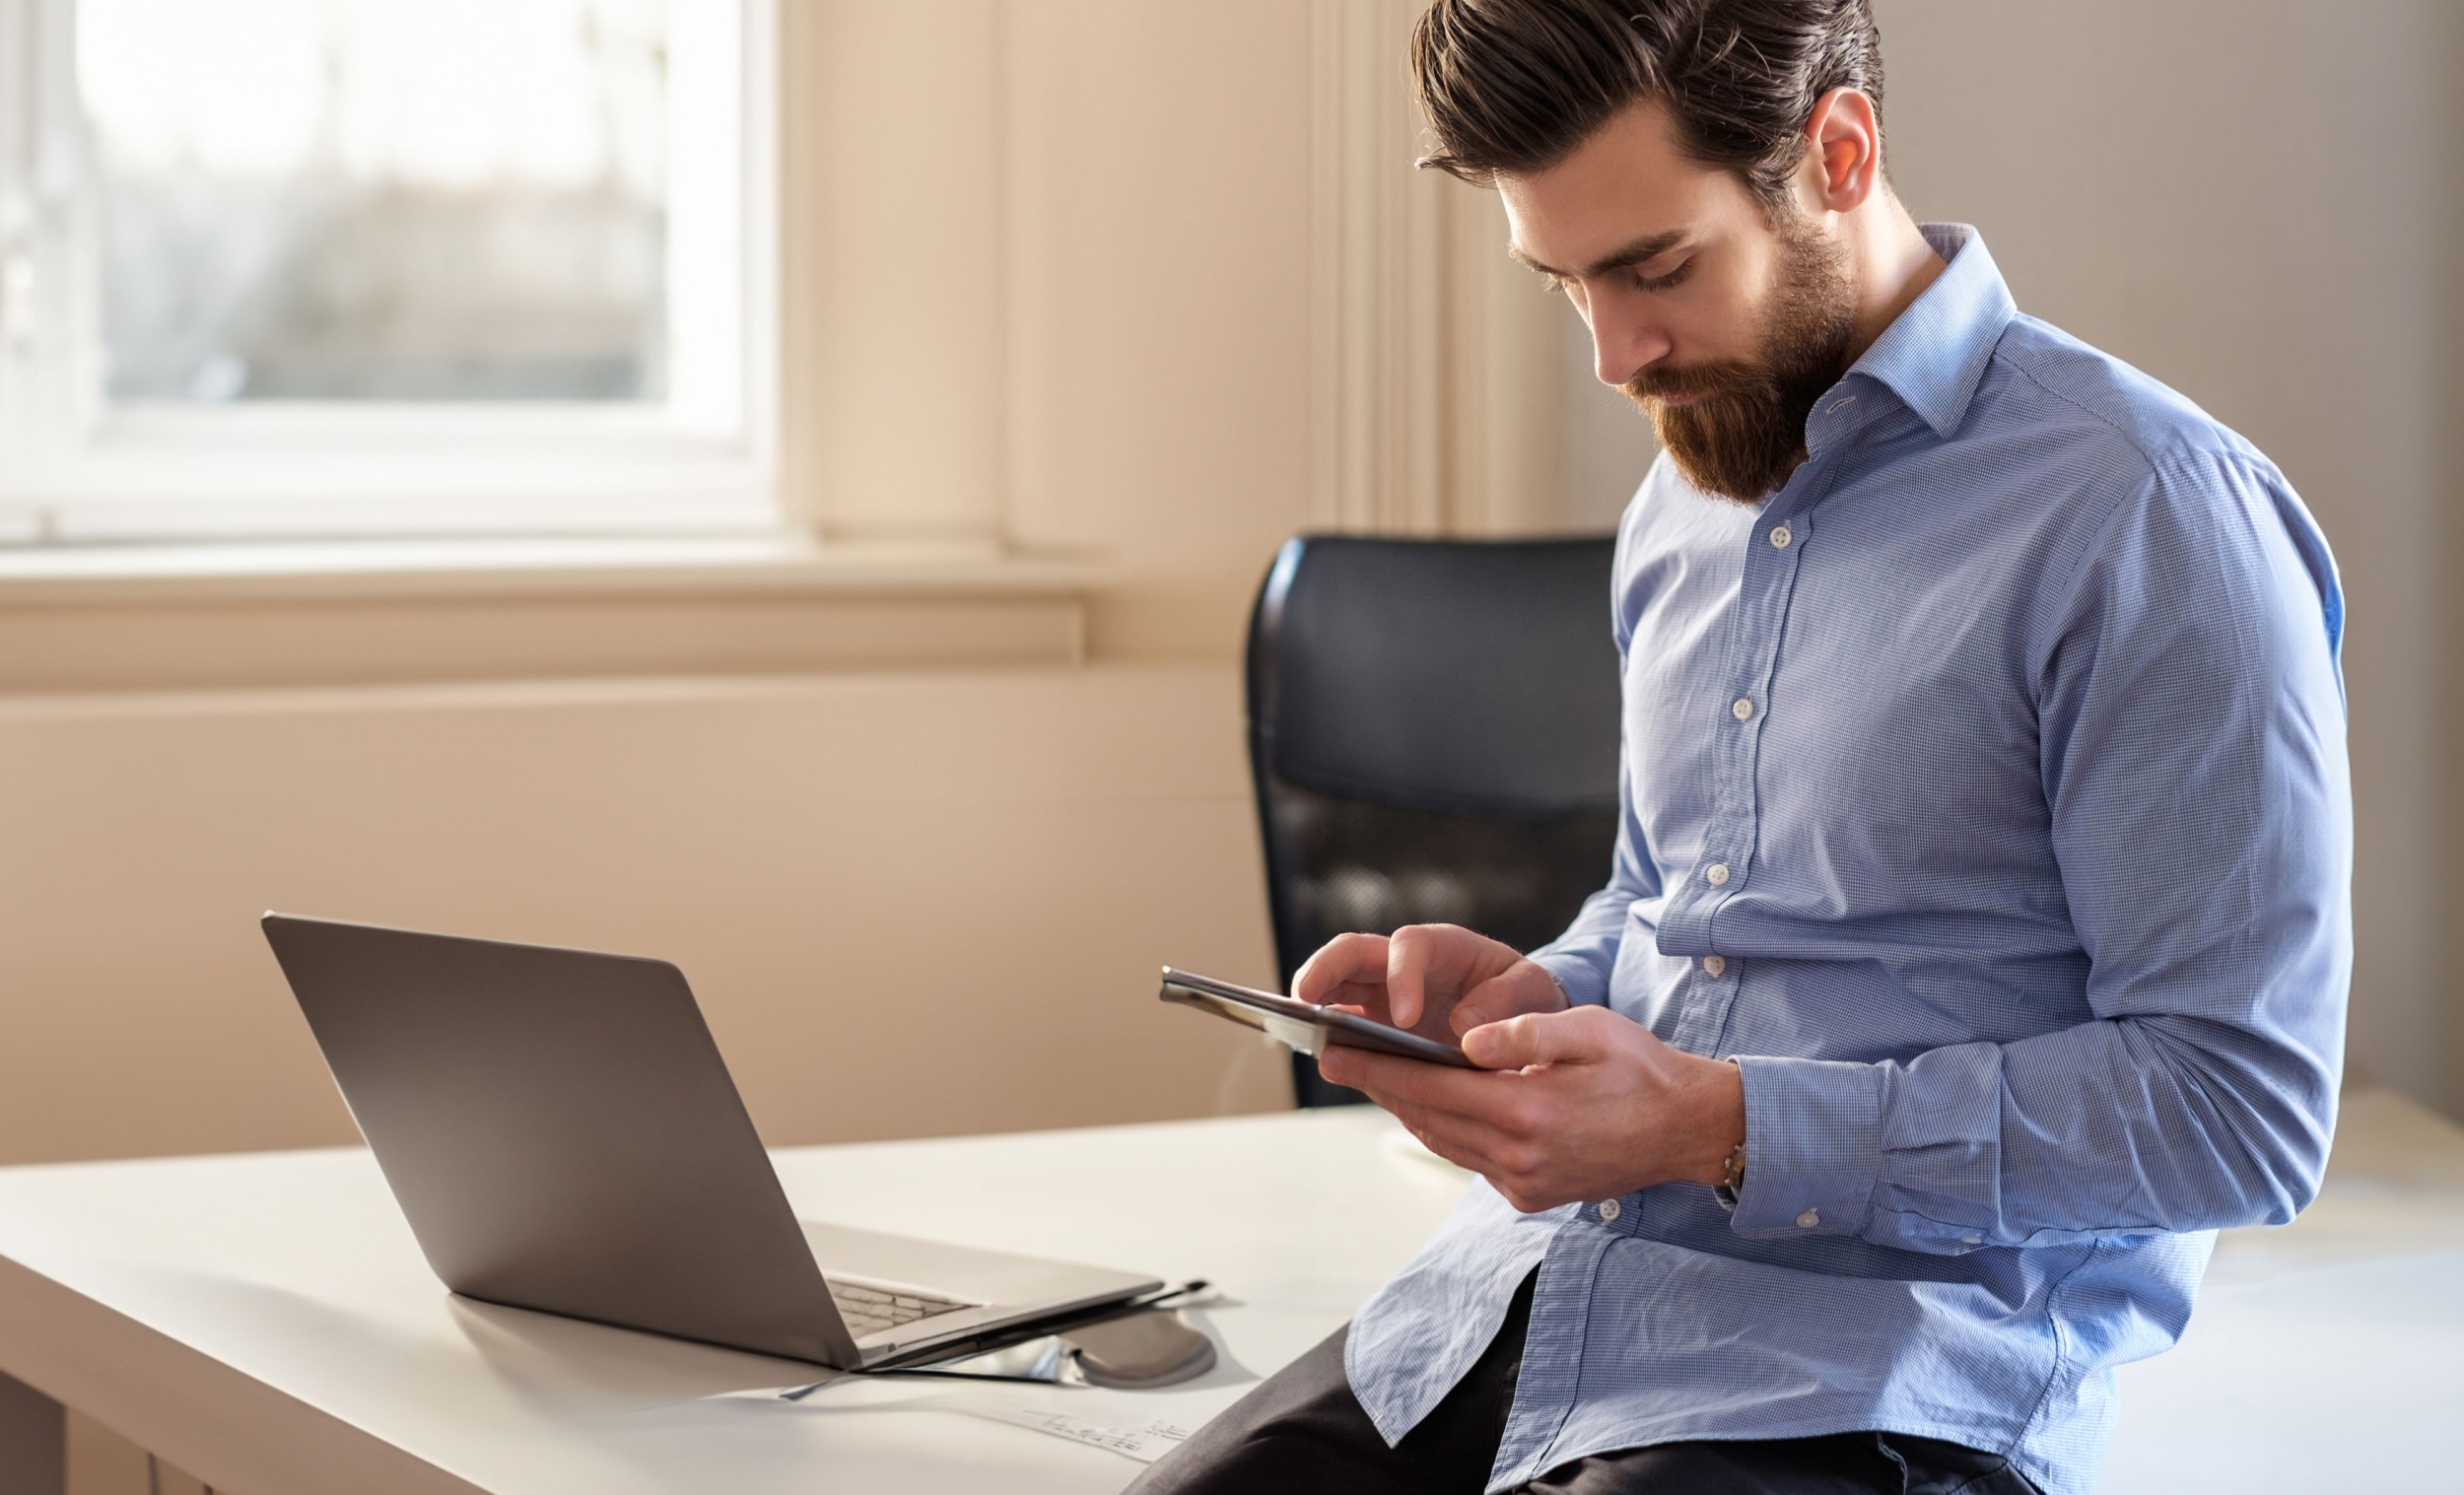 Office worker wearing a light blue shirt, looking at an iPad.